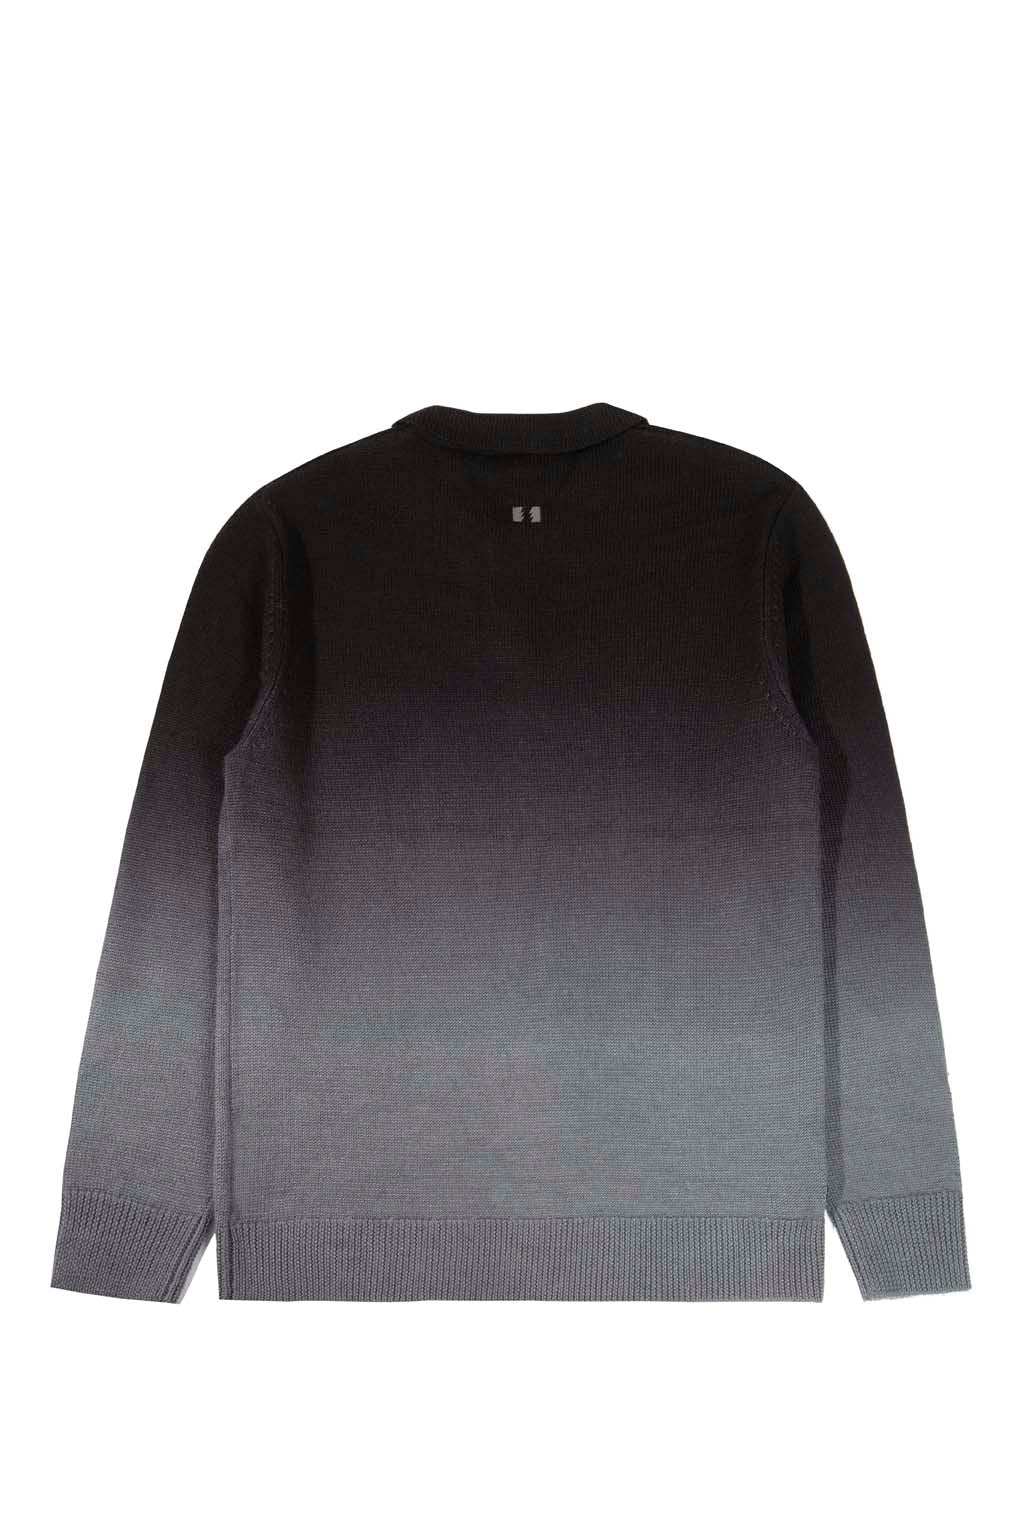 The Hundreds Haze Polo Sweater - Black